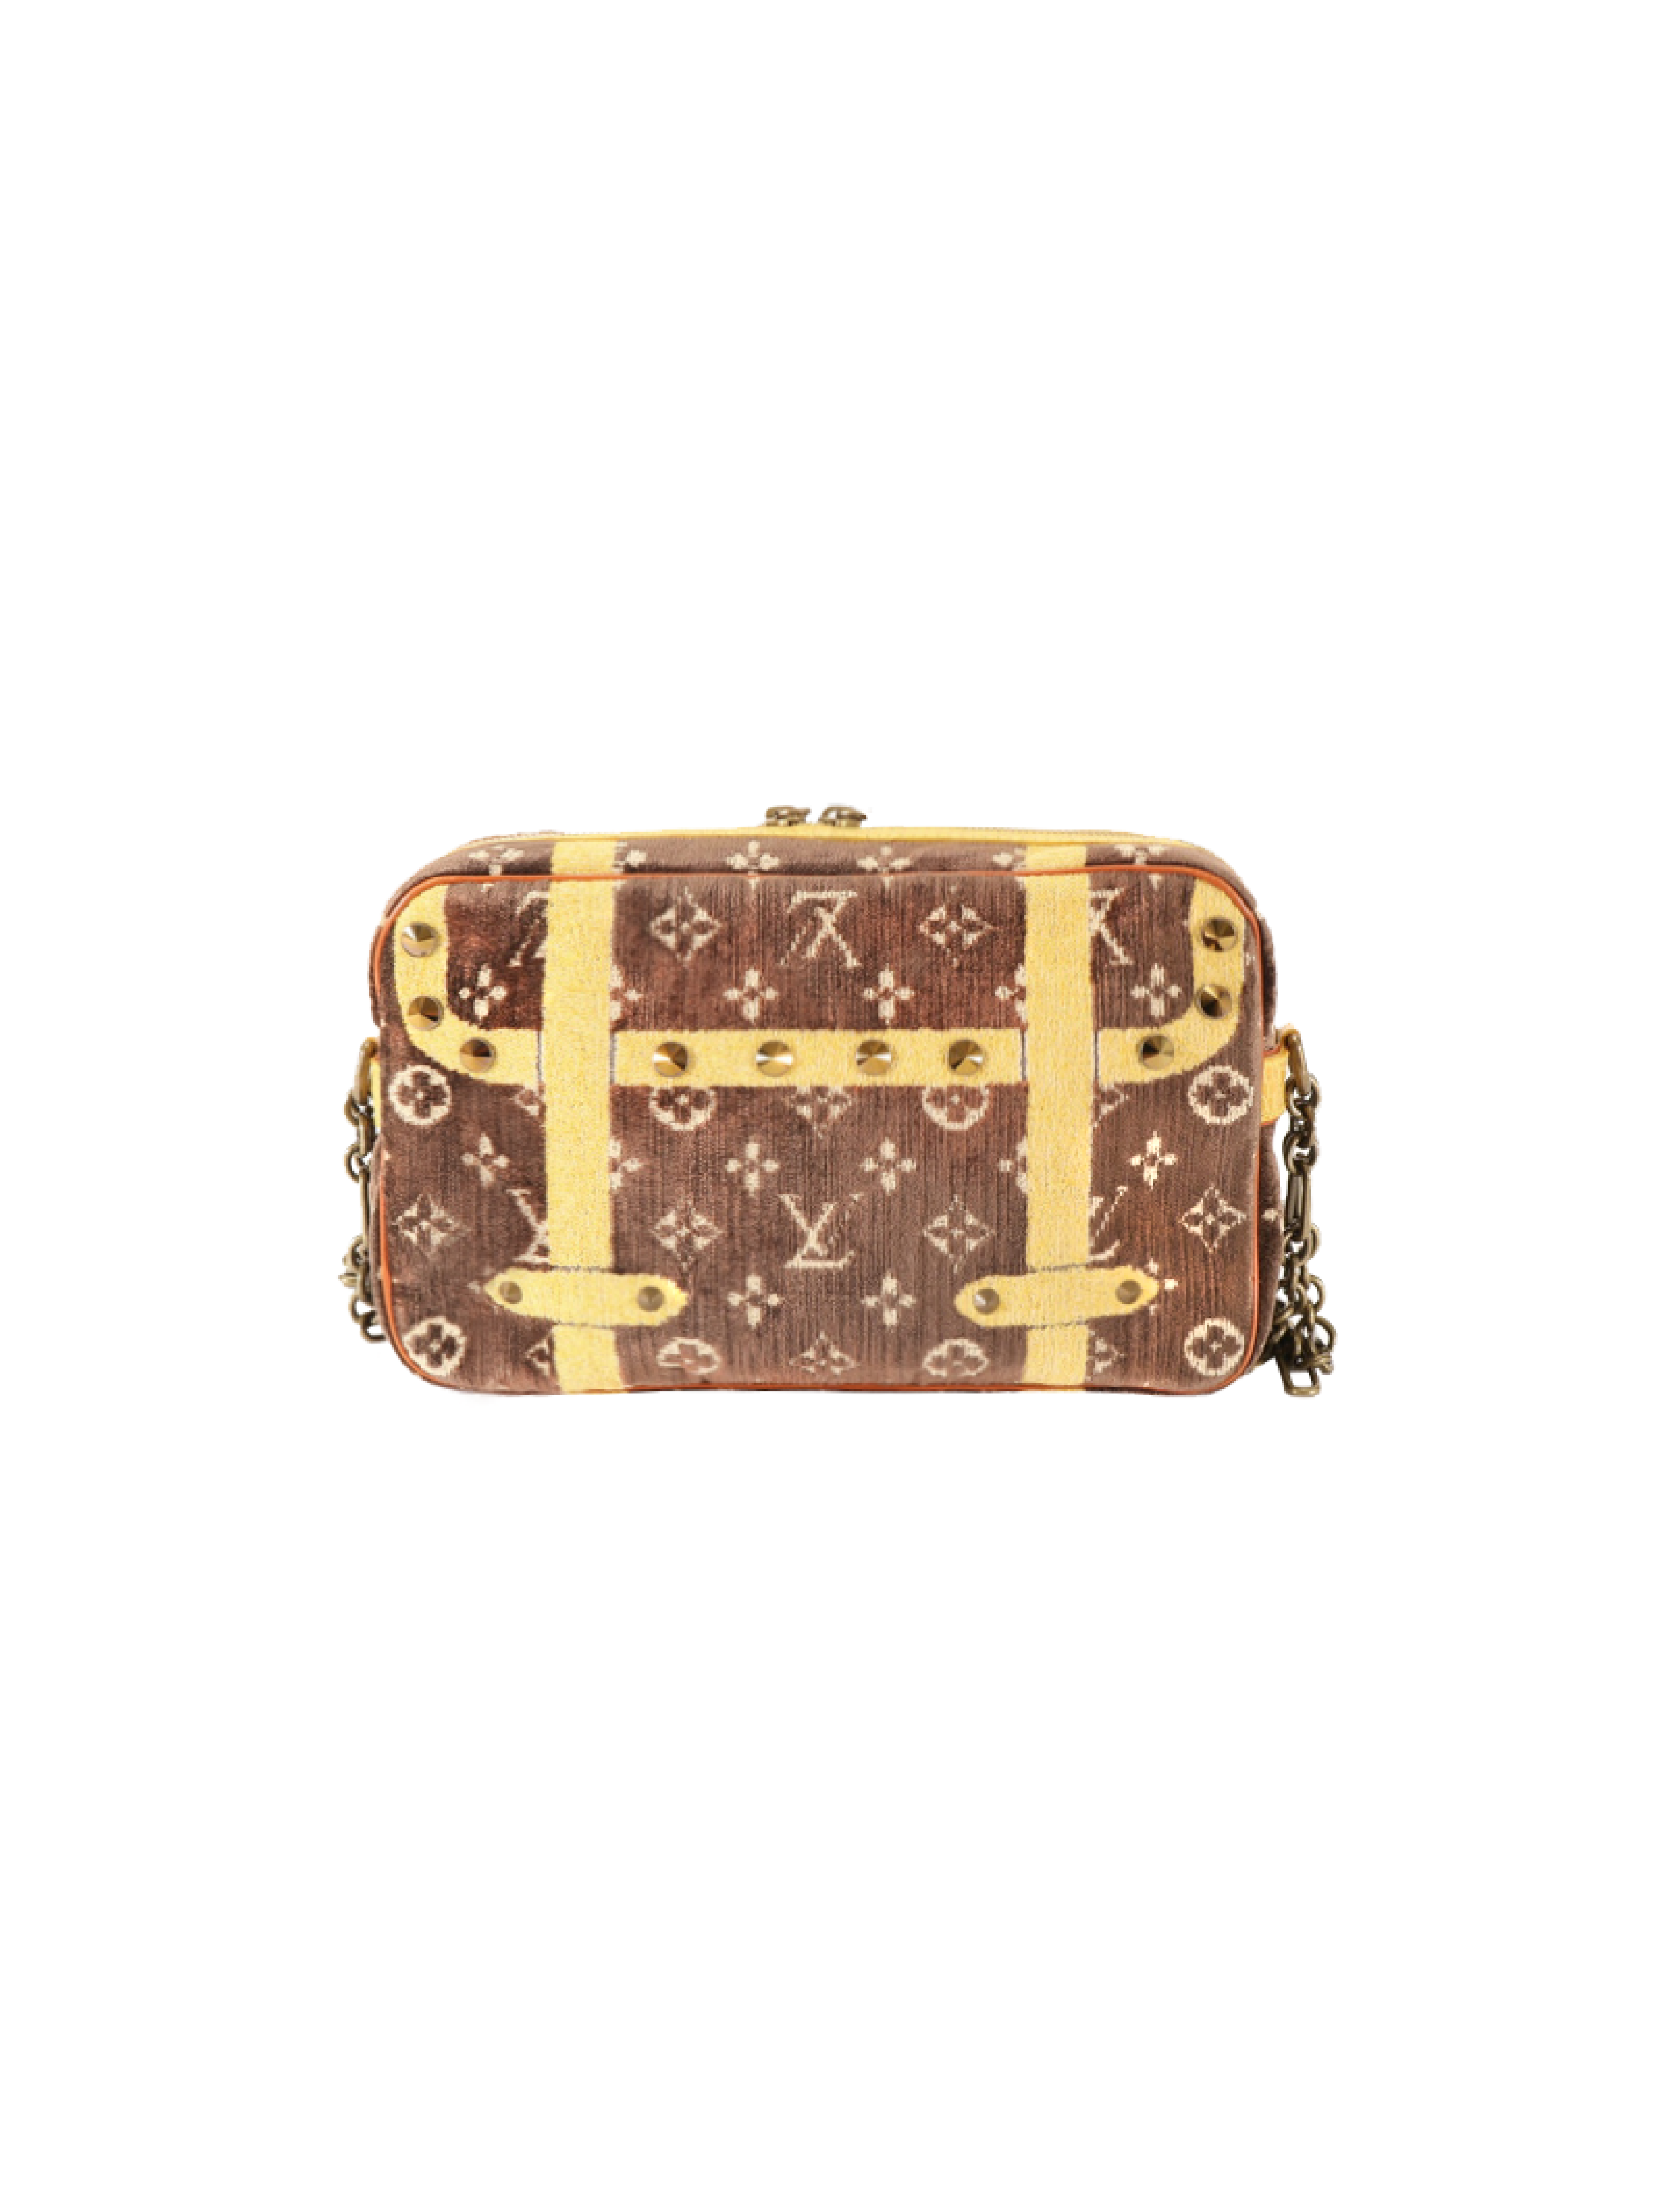 Louis Vuitton 2005 Trompe L'oeil Rare Handbag